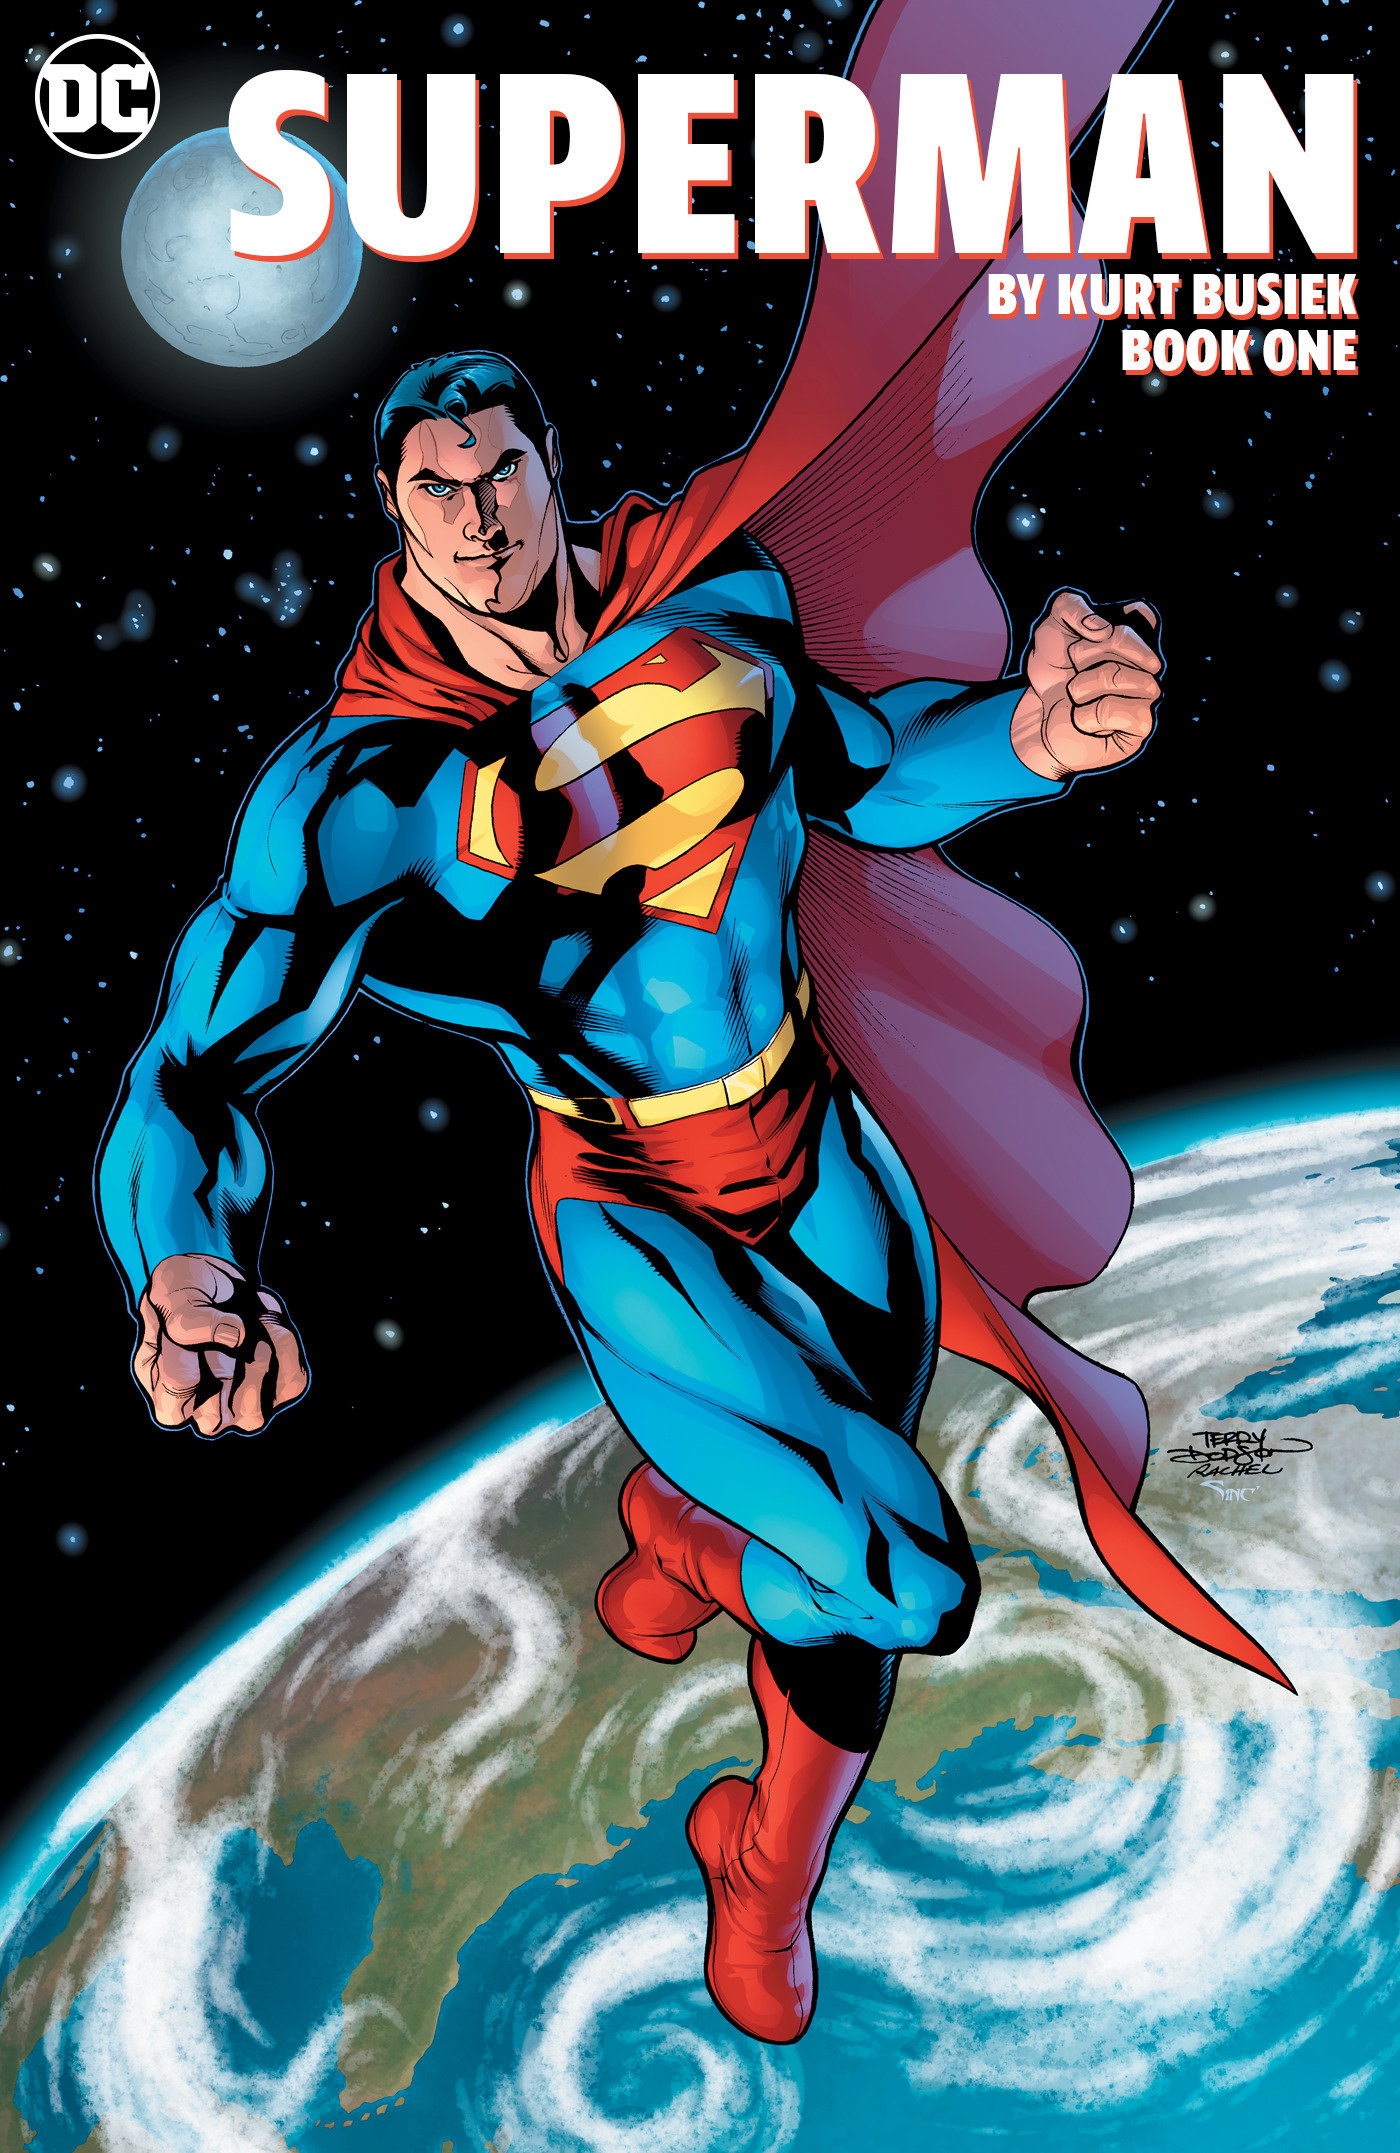 Superman by Kurt Busiek Hardcover Graphic Novel Volume 1